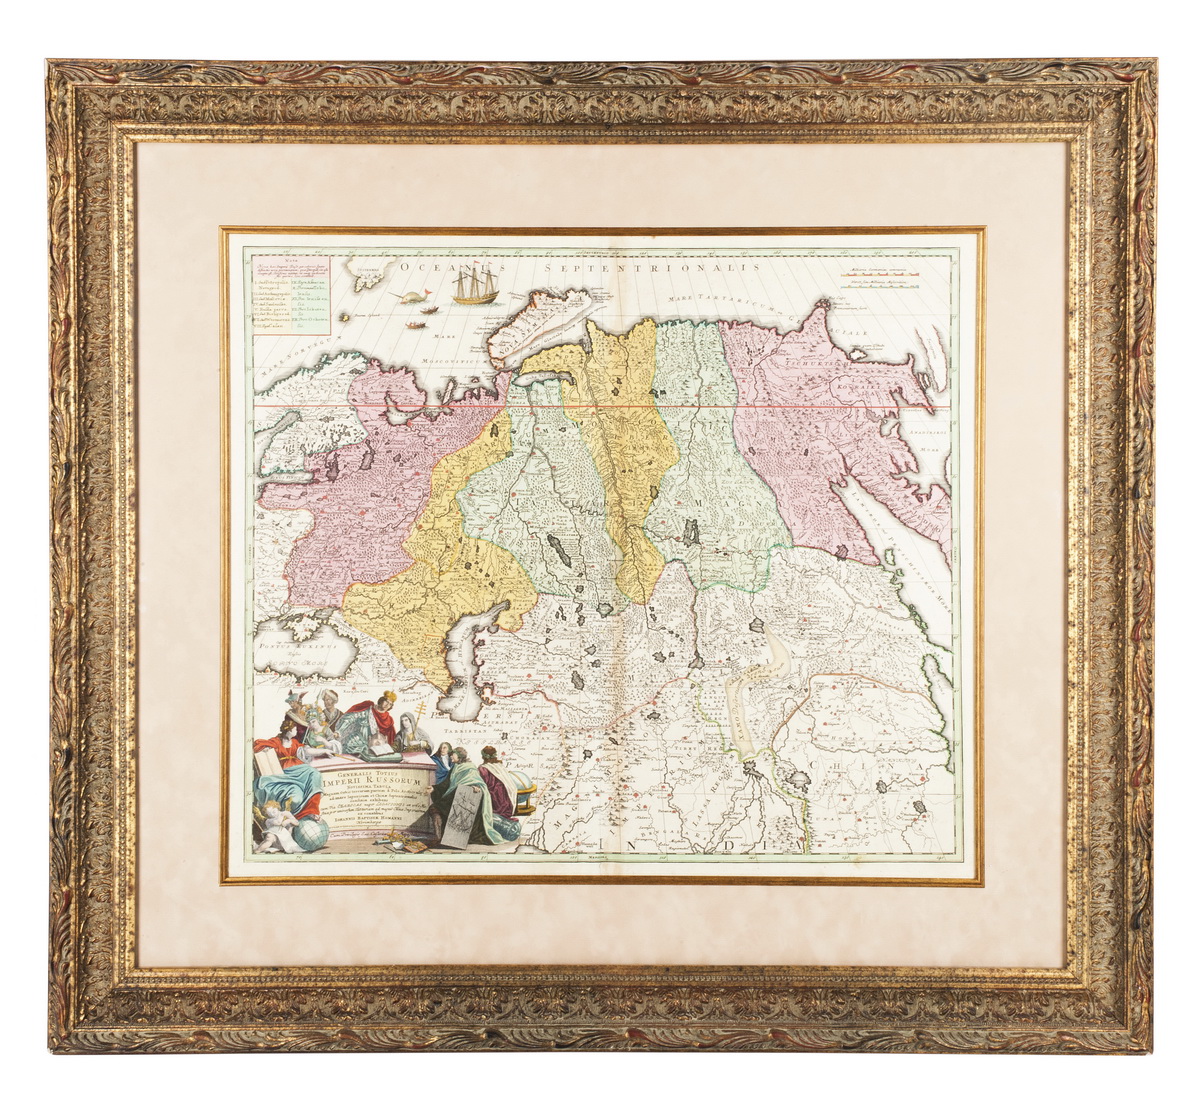 Johann Baptist Homann. Map. The Latest General Map of the Russian Empire [Generalis Totius Imperii Russorum]. - landofmagazines.com